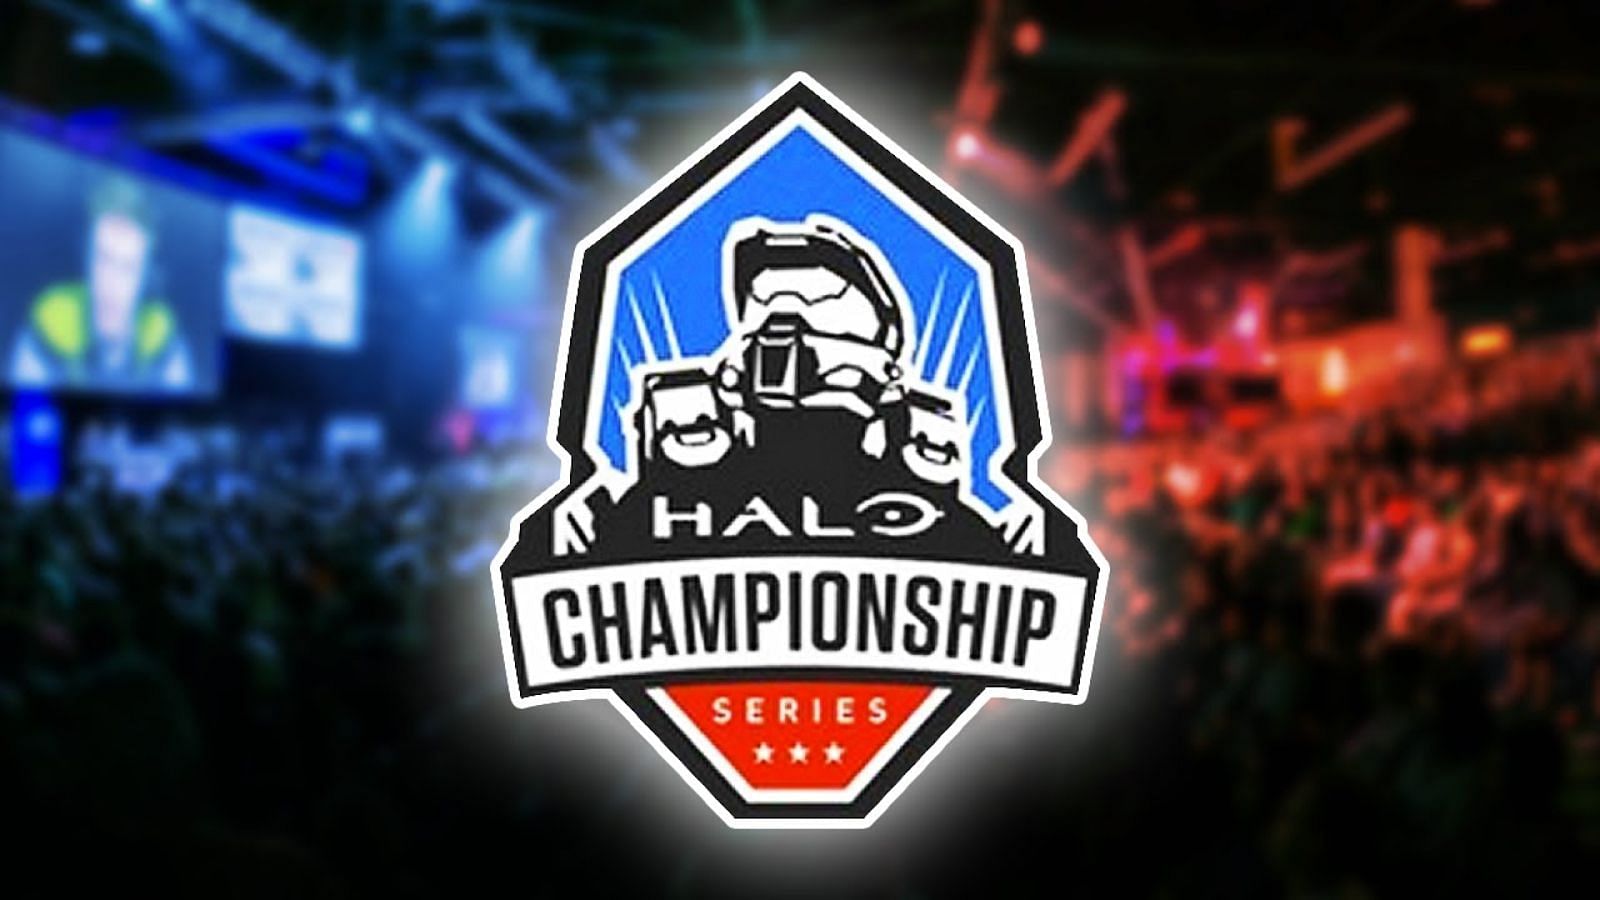 Halo Championship Series (HCS) Europe Pro Series 3 (Image by Halo)